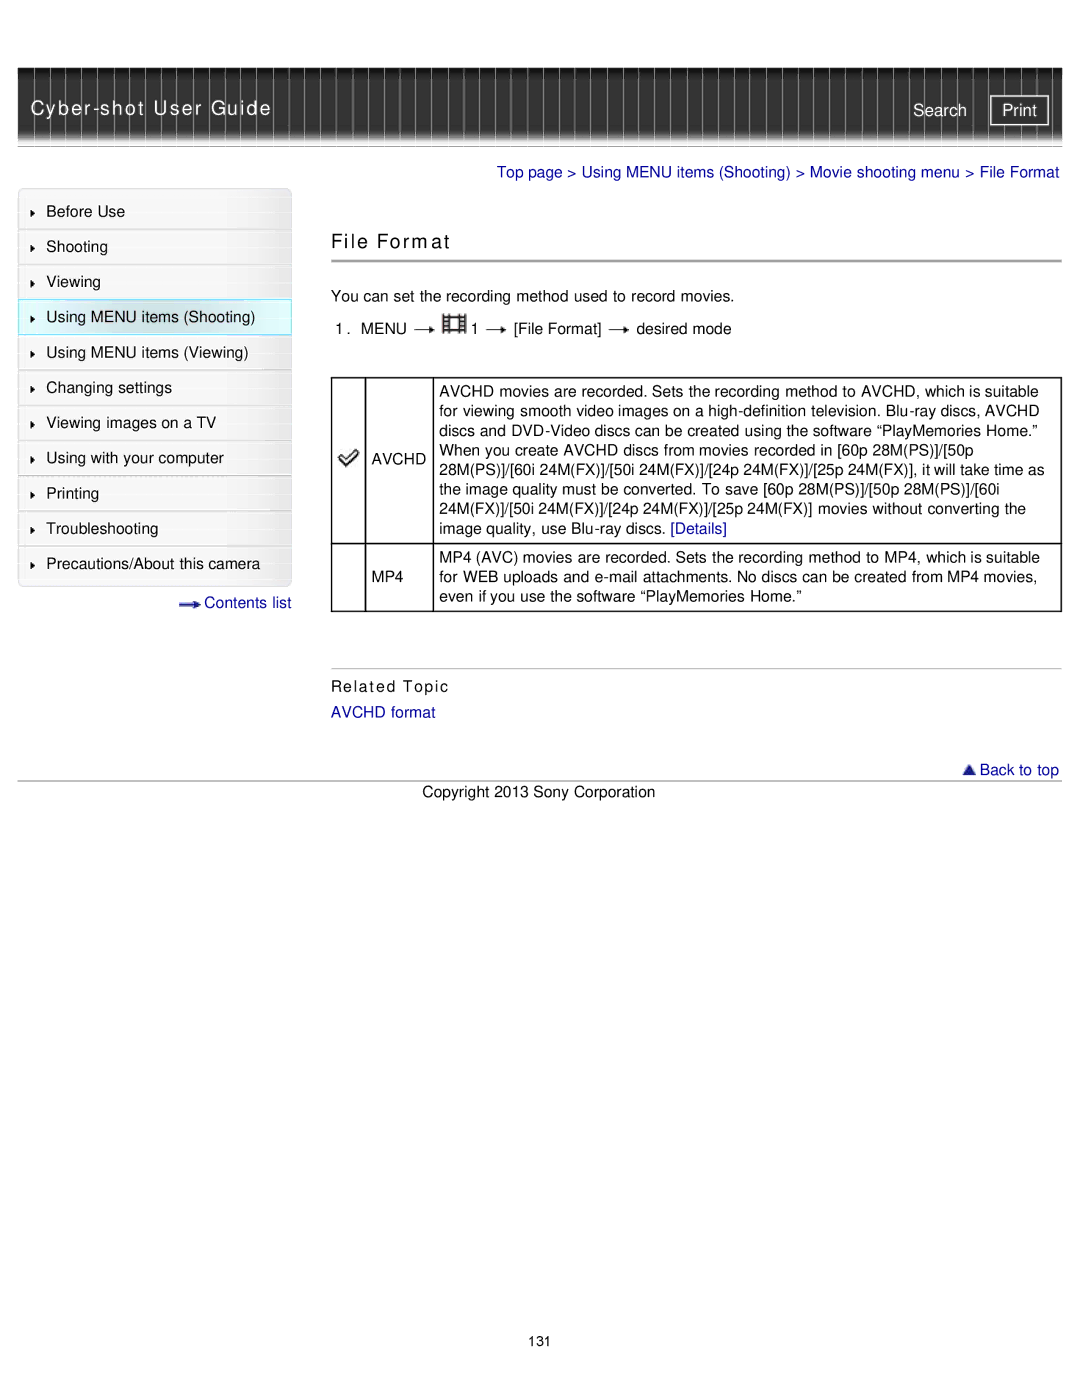 Sony DSC-RX1/RX1R manual File Format, Avchd 